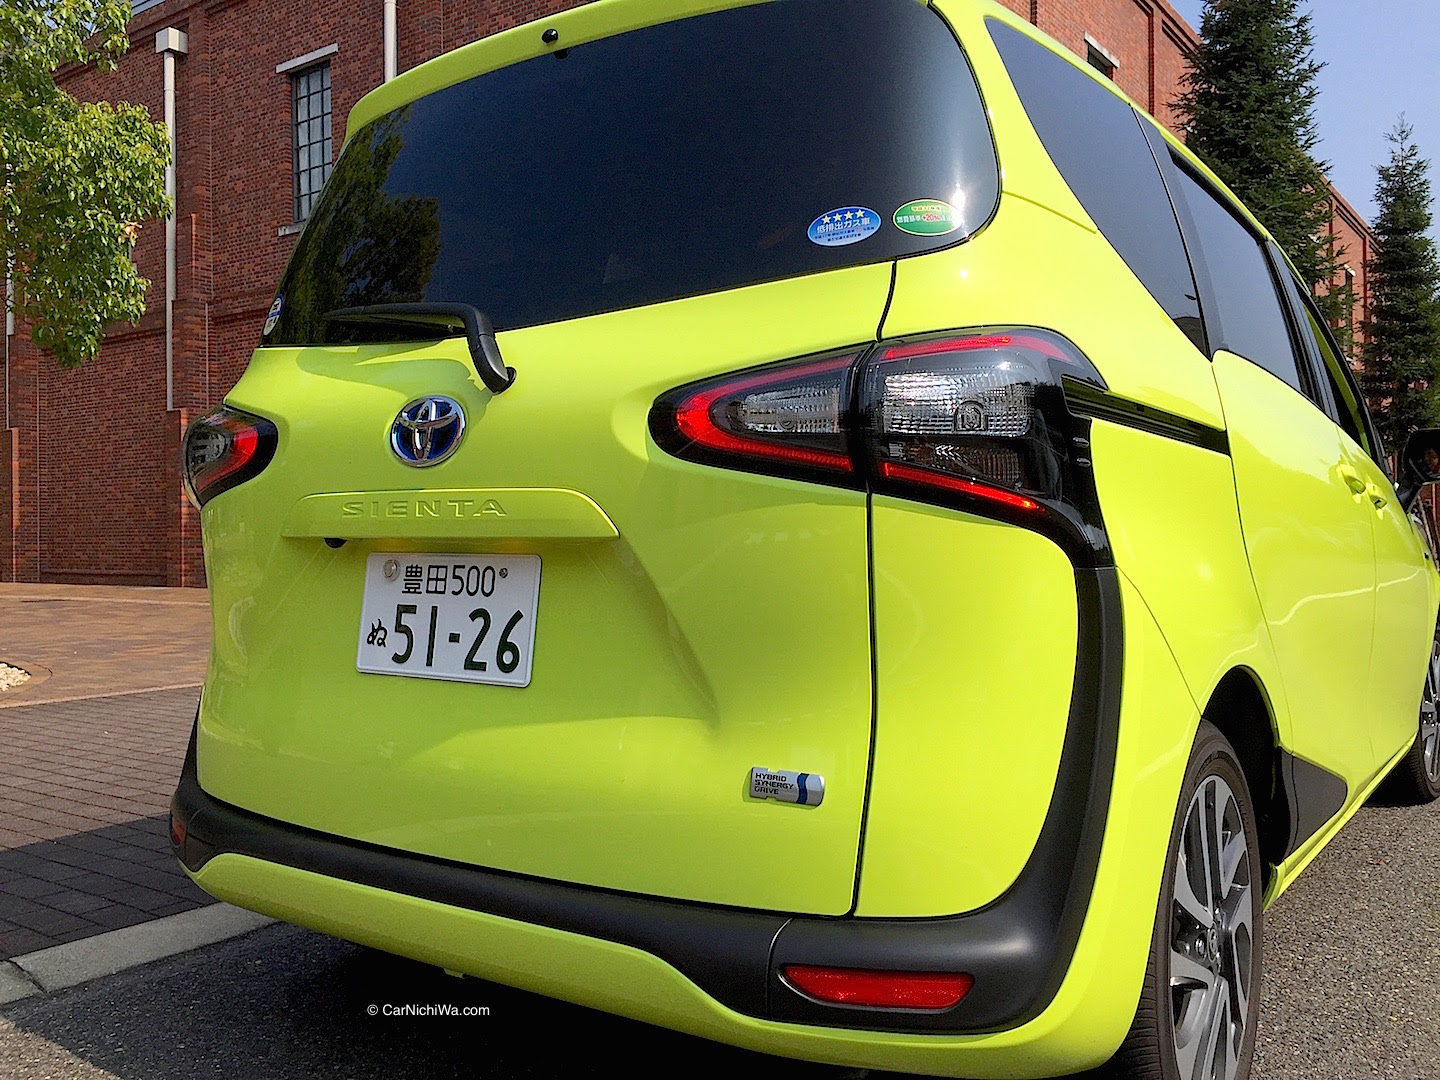 Modifikasi Stiker Mobil  Warna  Kuning  Terbaru 2019 